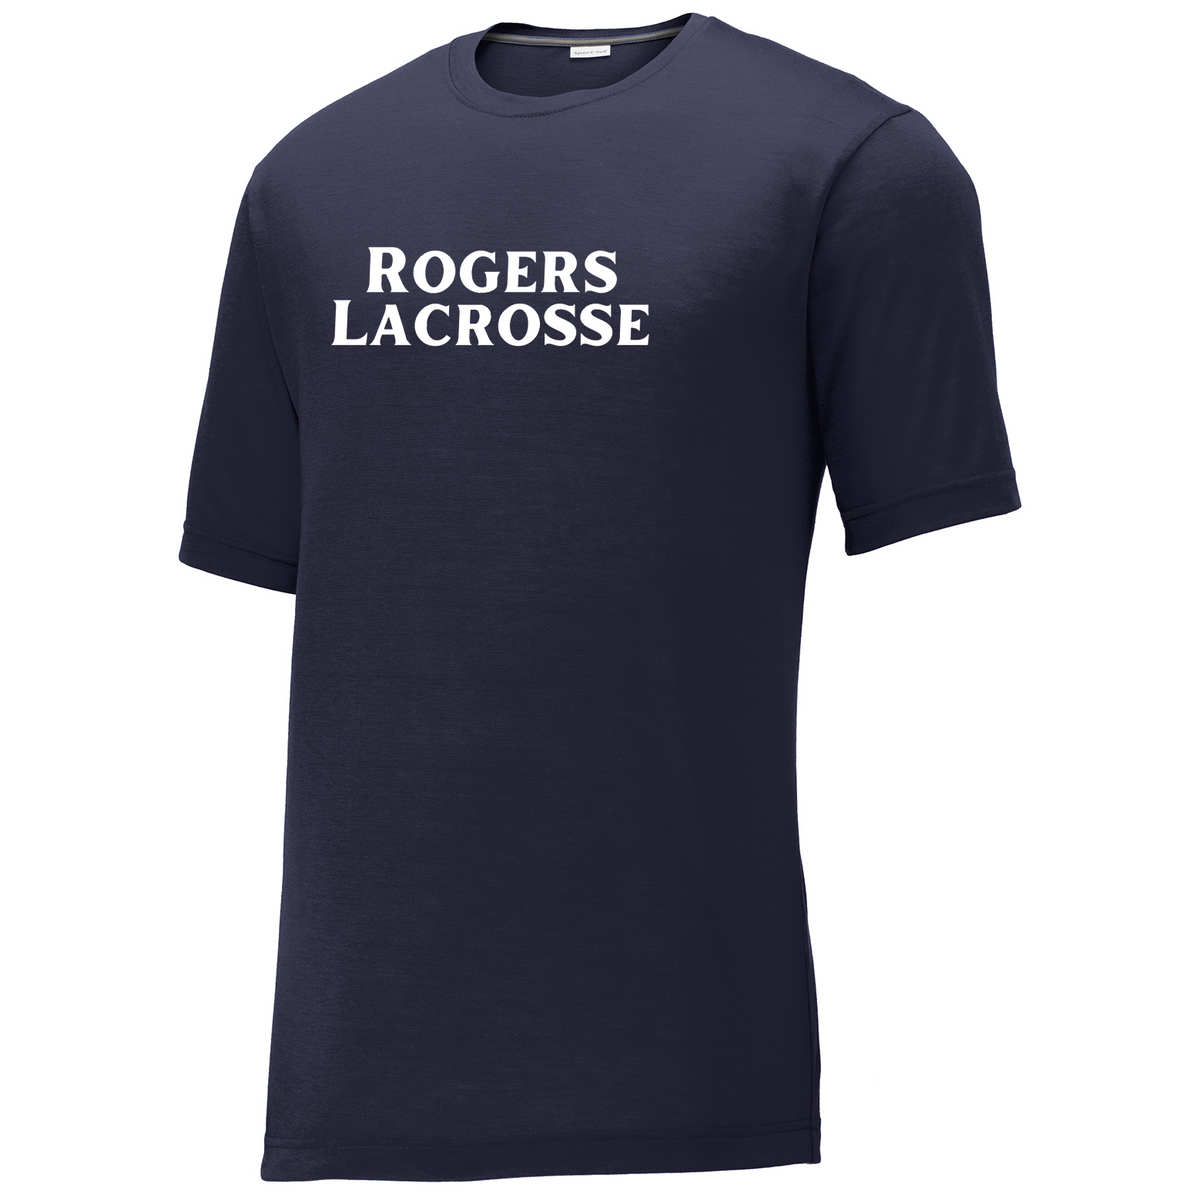 Rogers Lacrosse CottonTouch Performance T-Shirt